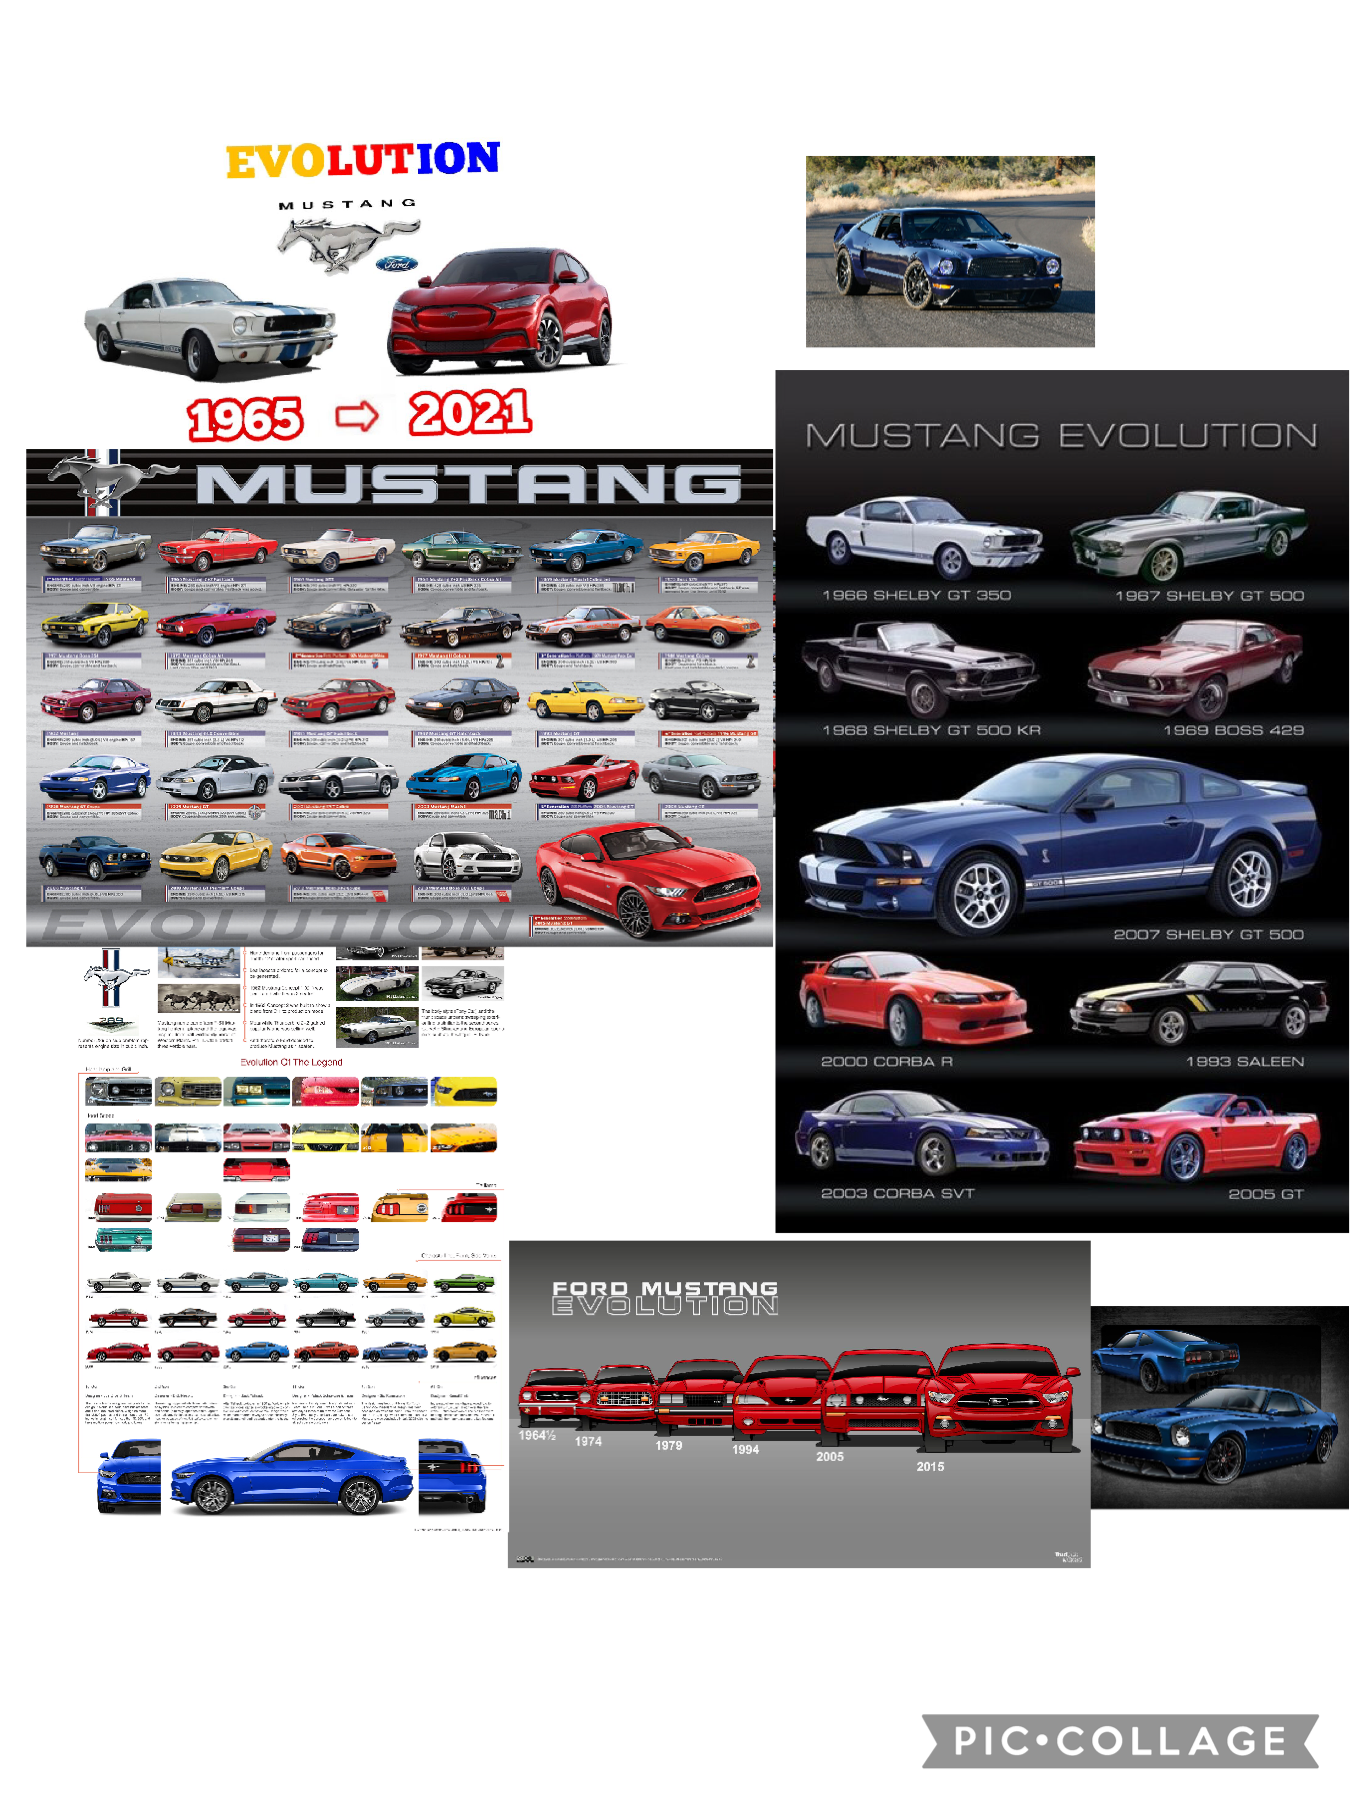 L’évolution de la Mustang 